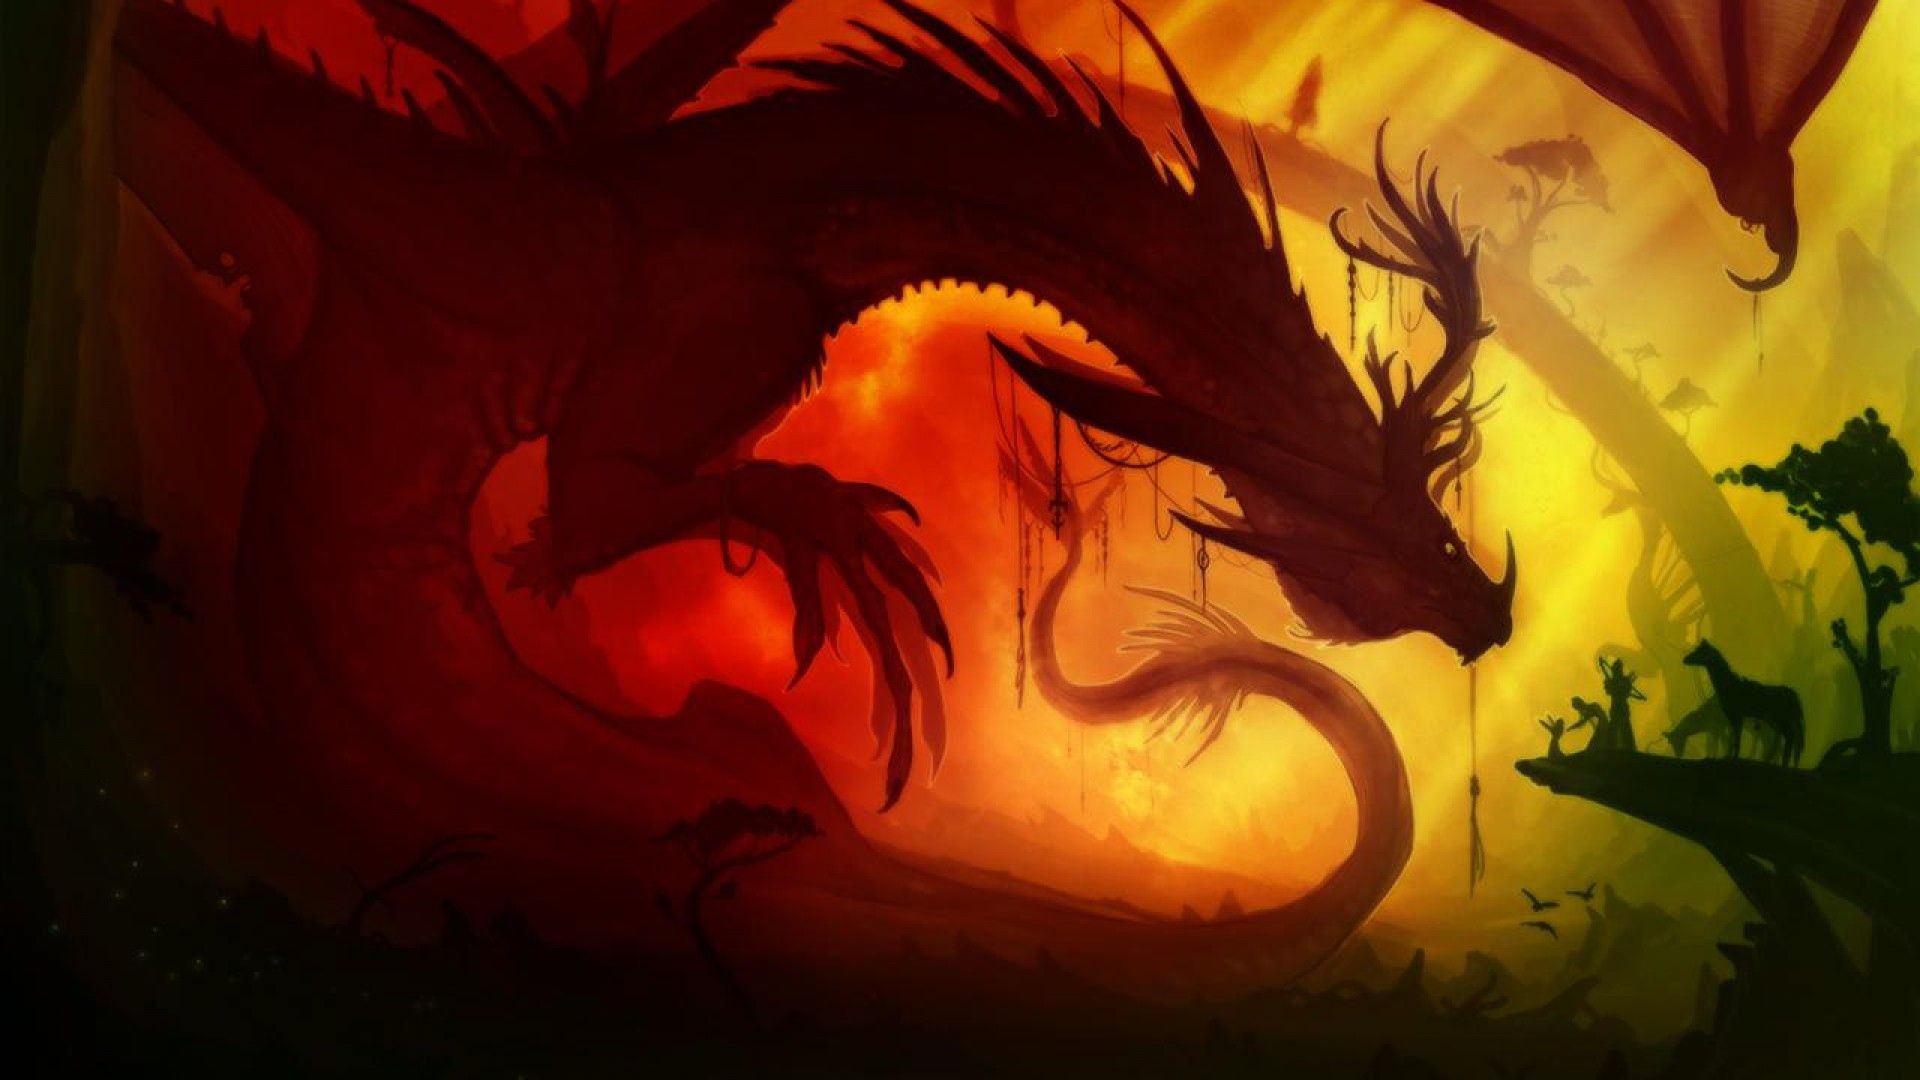 4k dragon wallpaper,dragon,cg artwork,fictional character,illustration,mythical creature